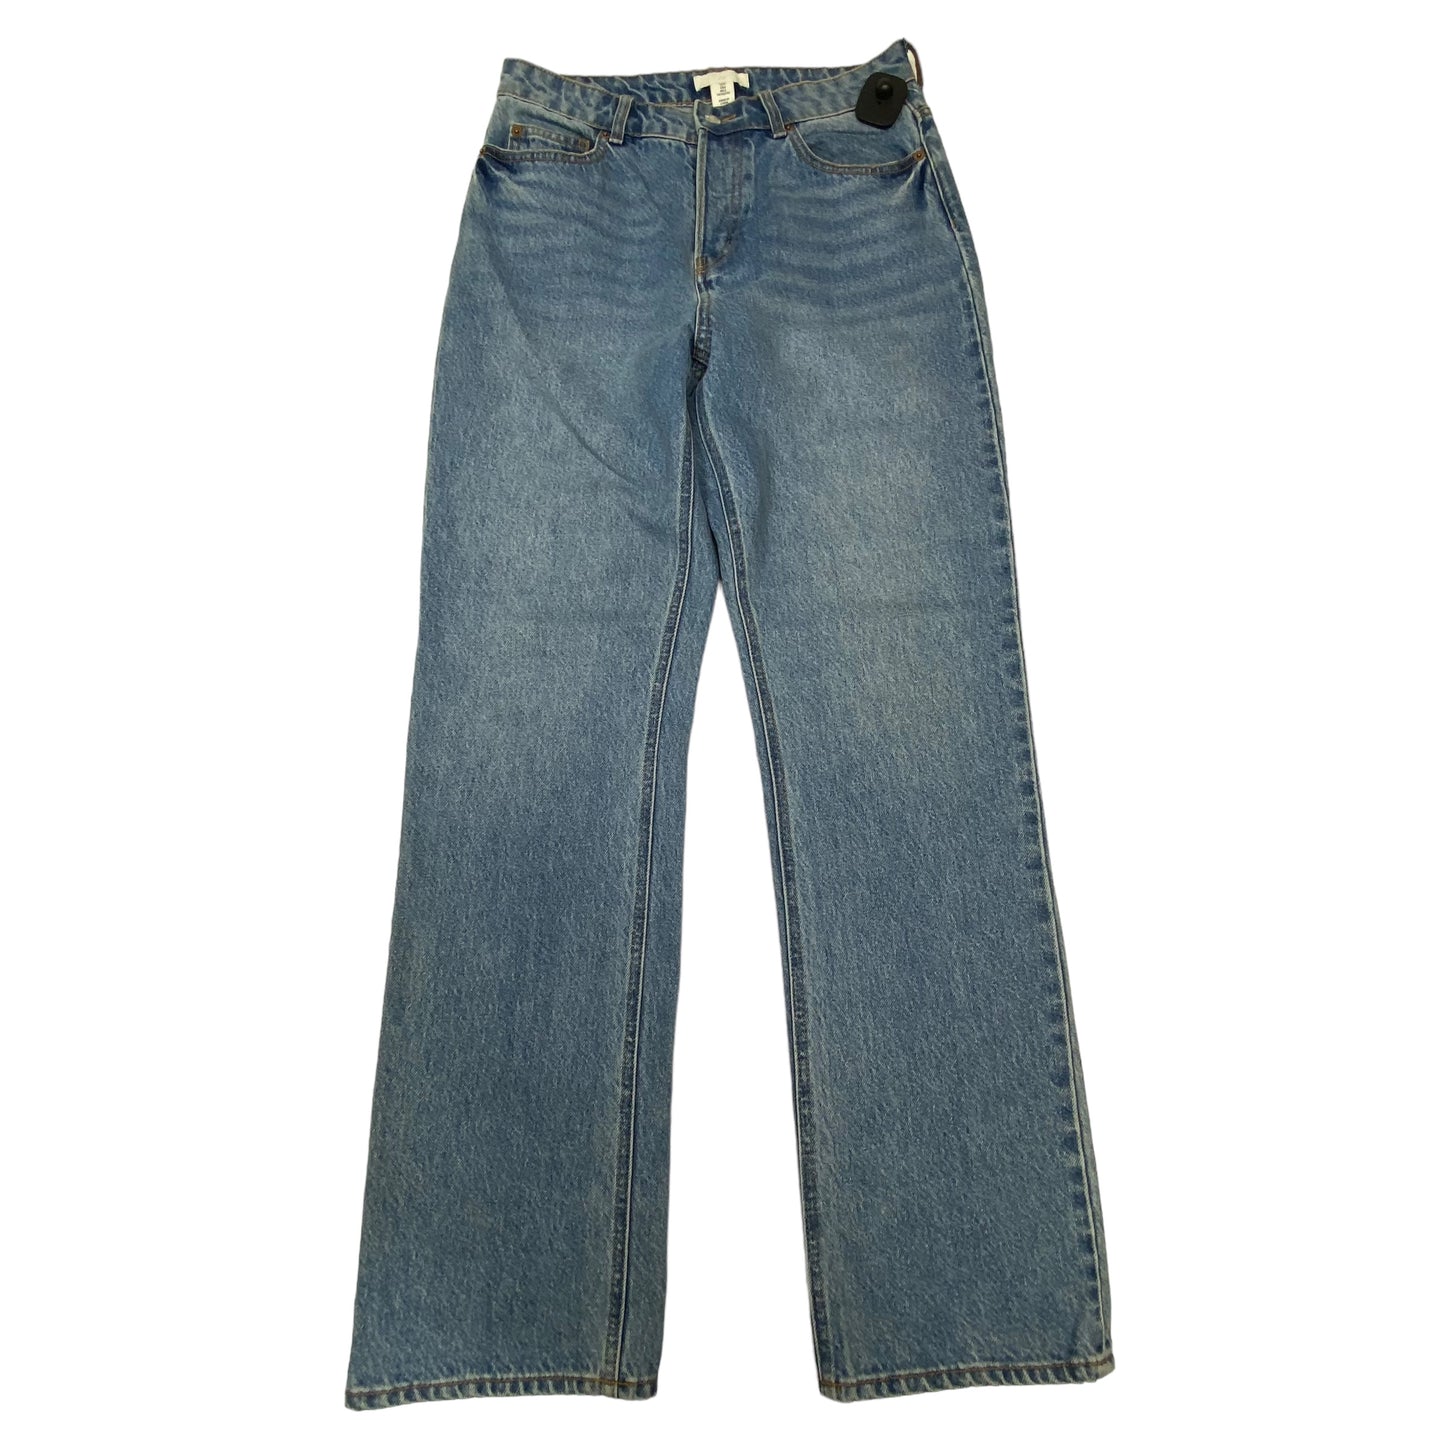 Blue Denim Jeans Straight H&m, Size 6